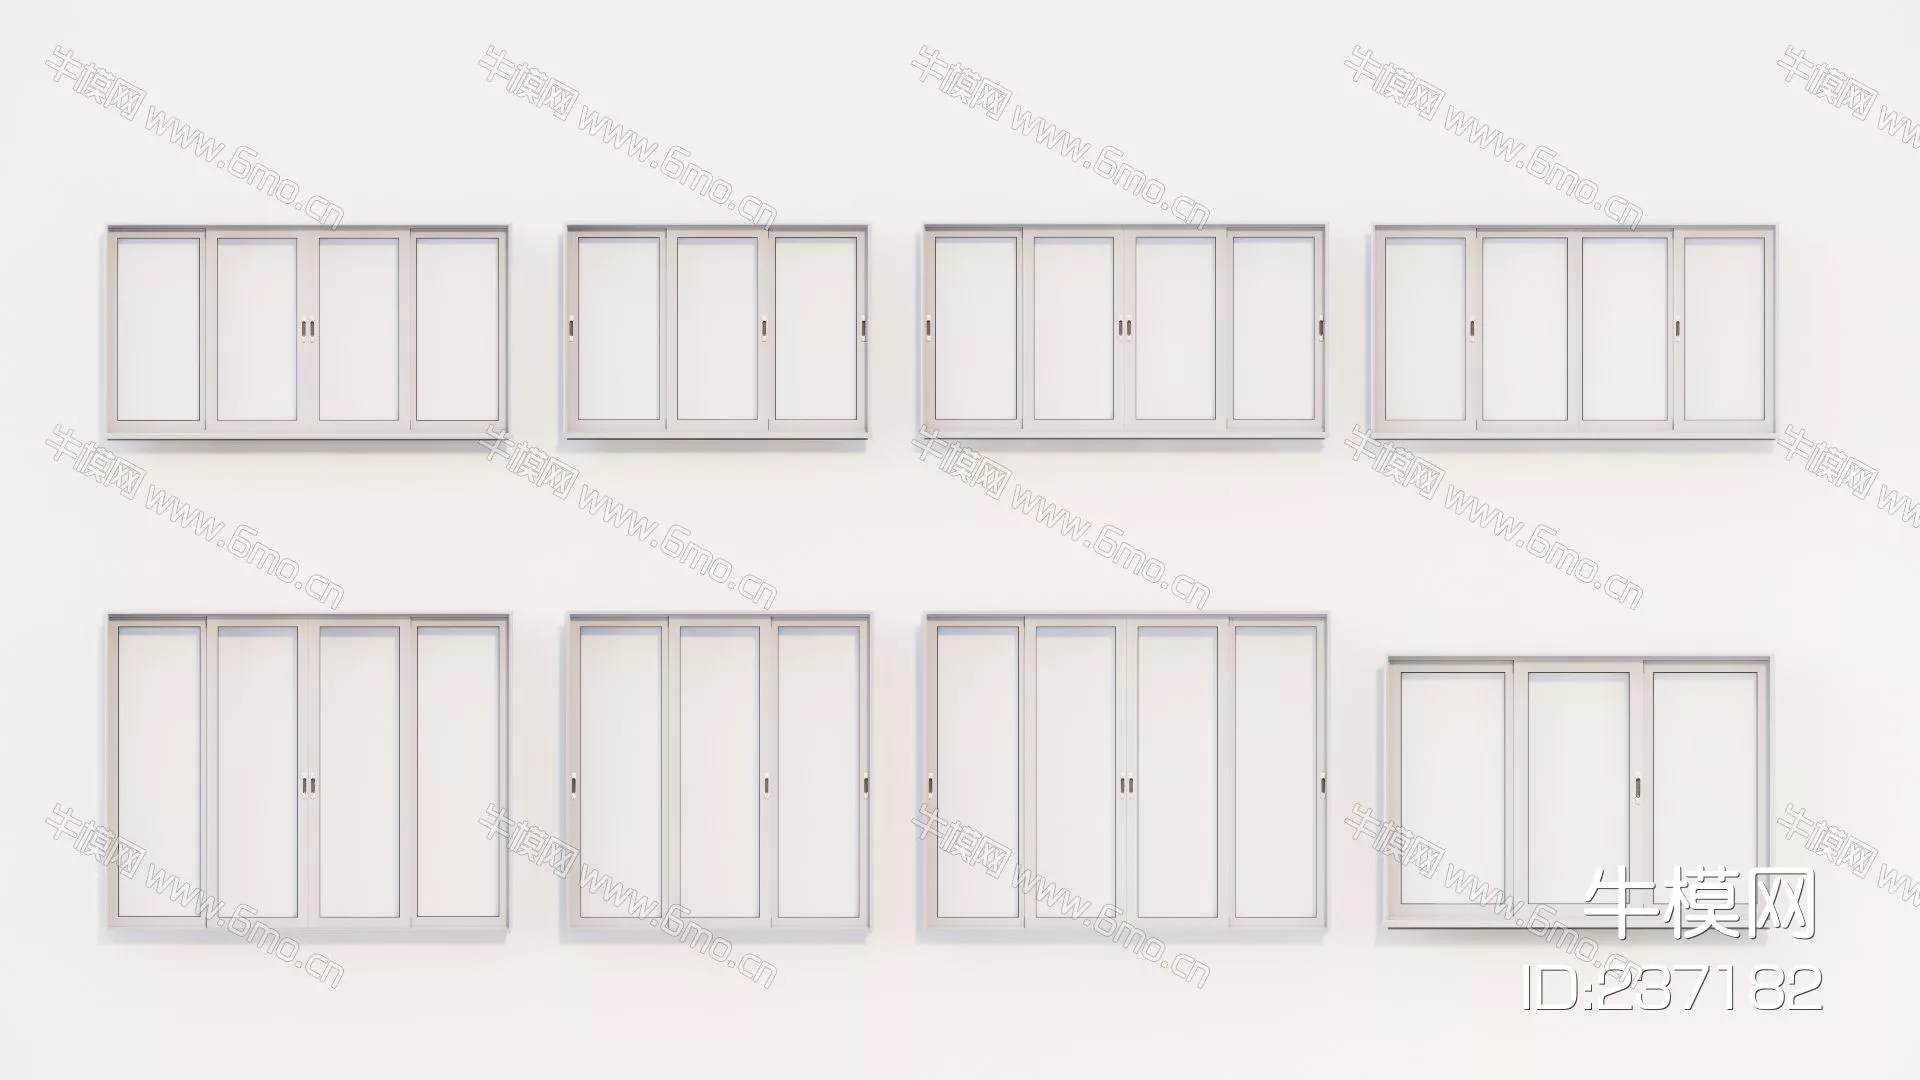 MODERN DOOR AND WINDOWS - SKETCHUP 3D MODEL - ENSCAPE - 237182